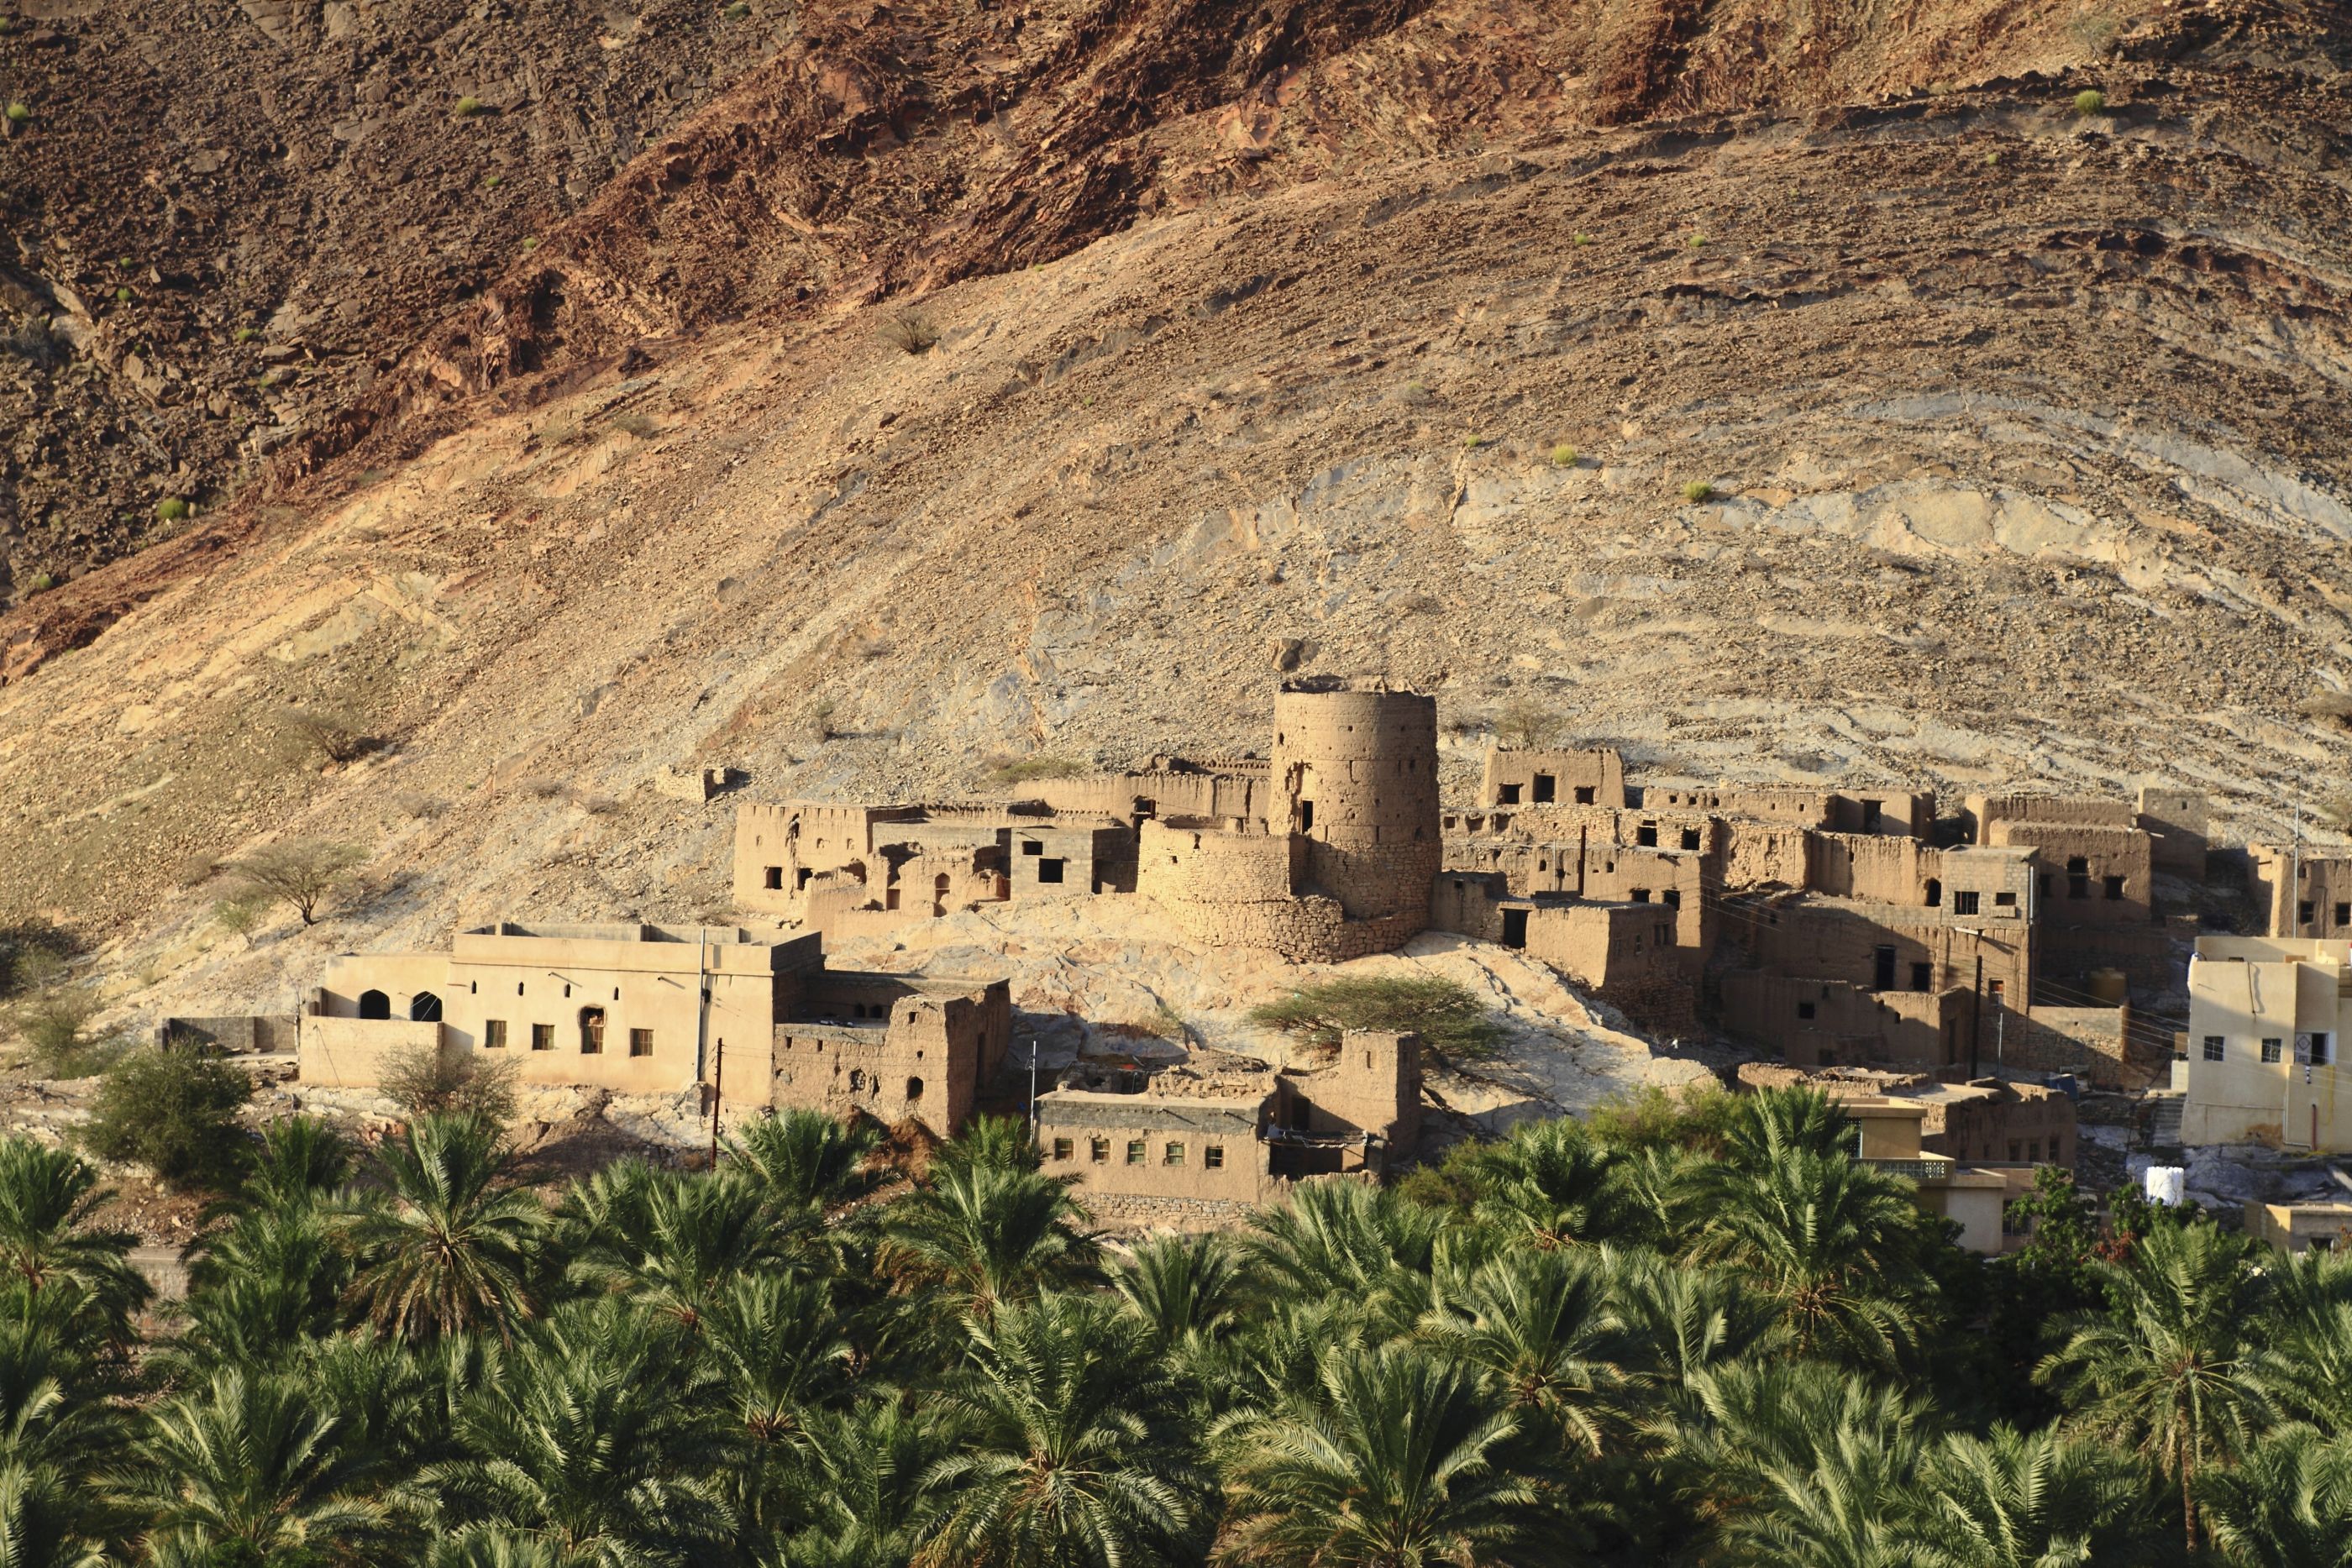 The abandoned village of Birkat Al Mawz in Oman